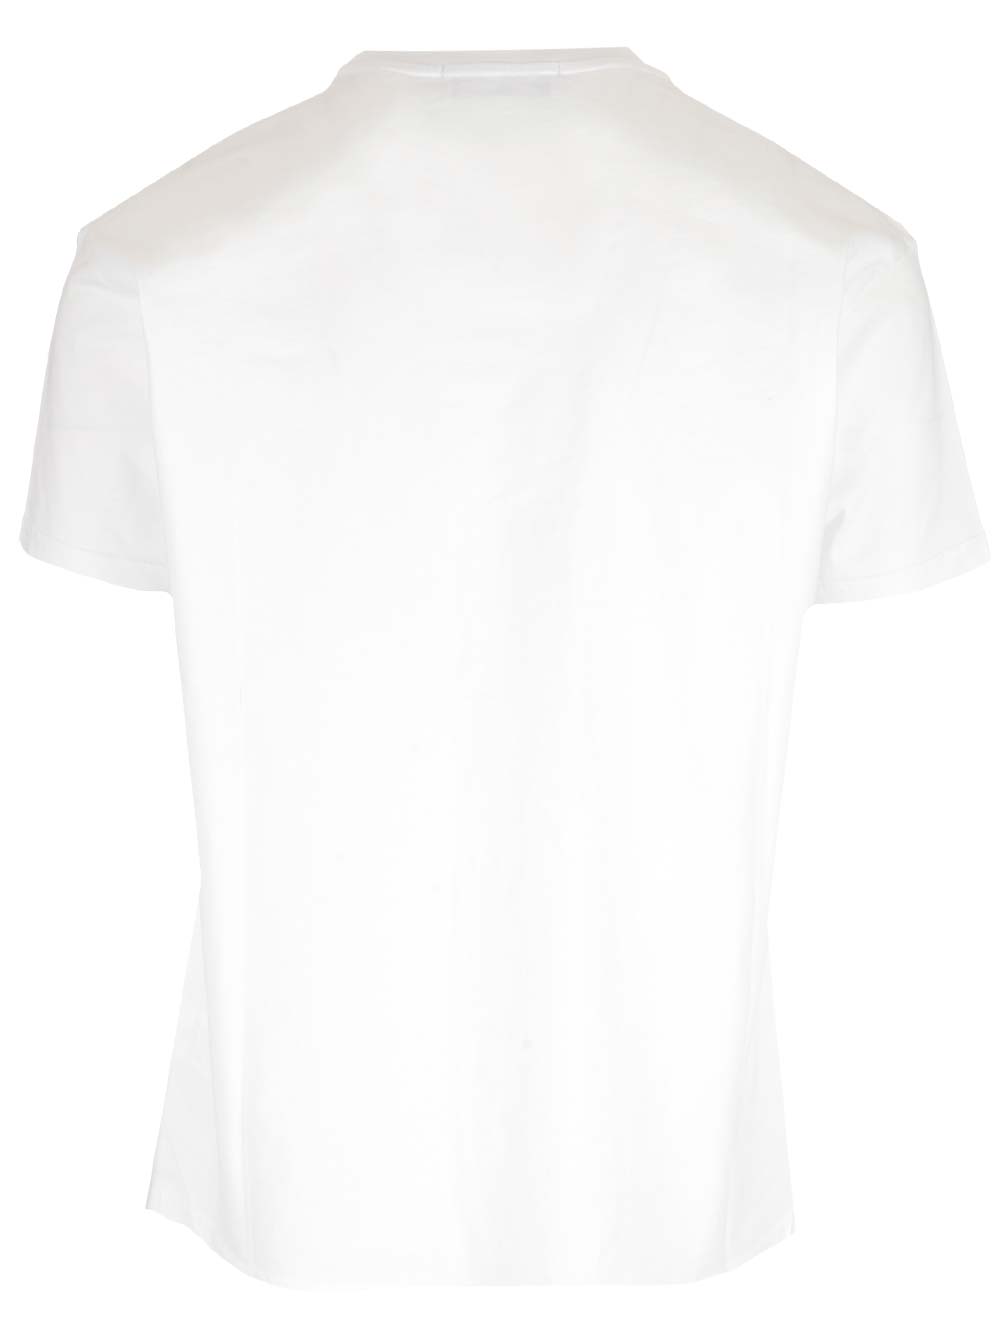 Shop Vivienne Westwood White Orbital T-shirt